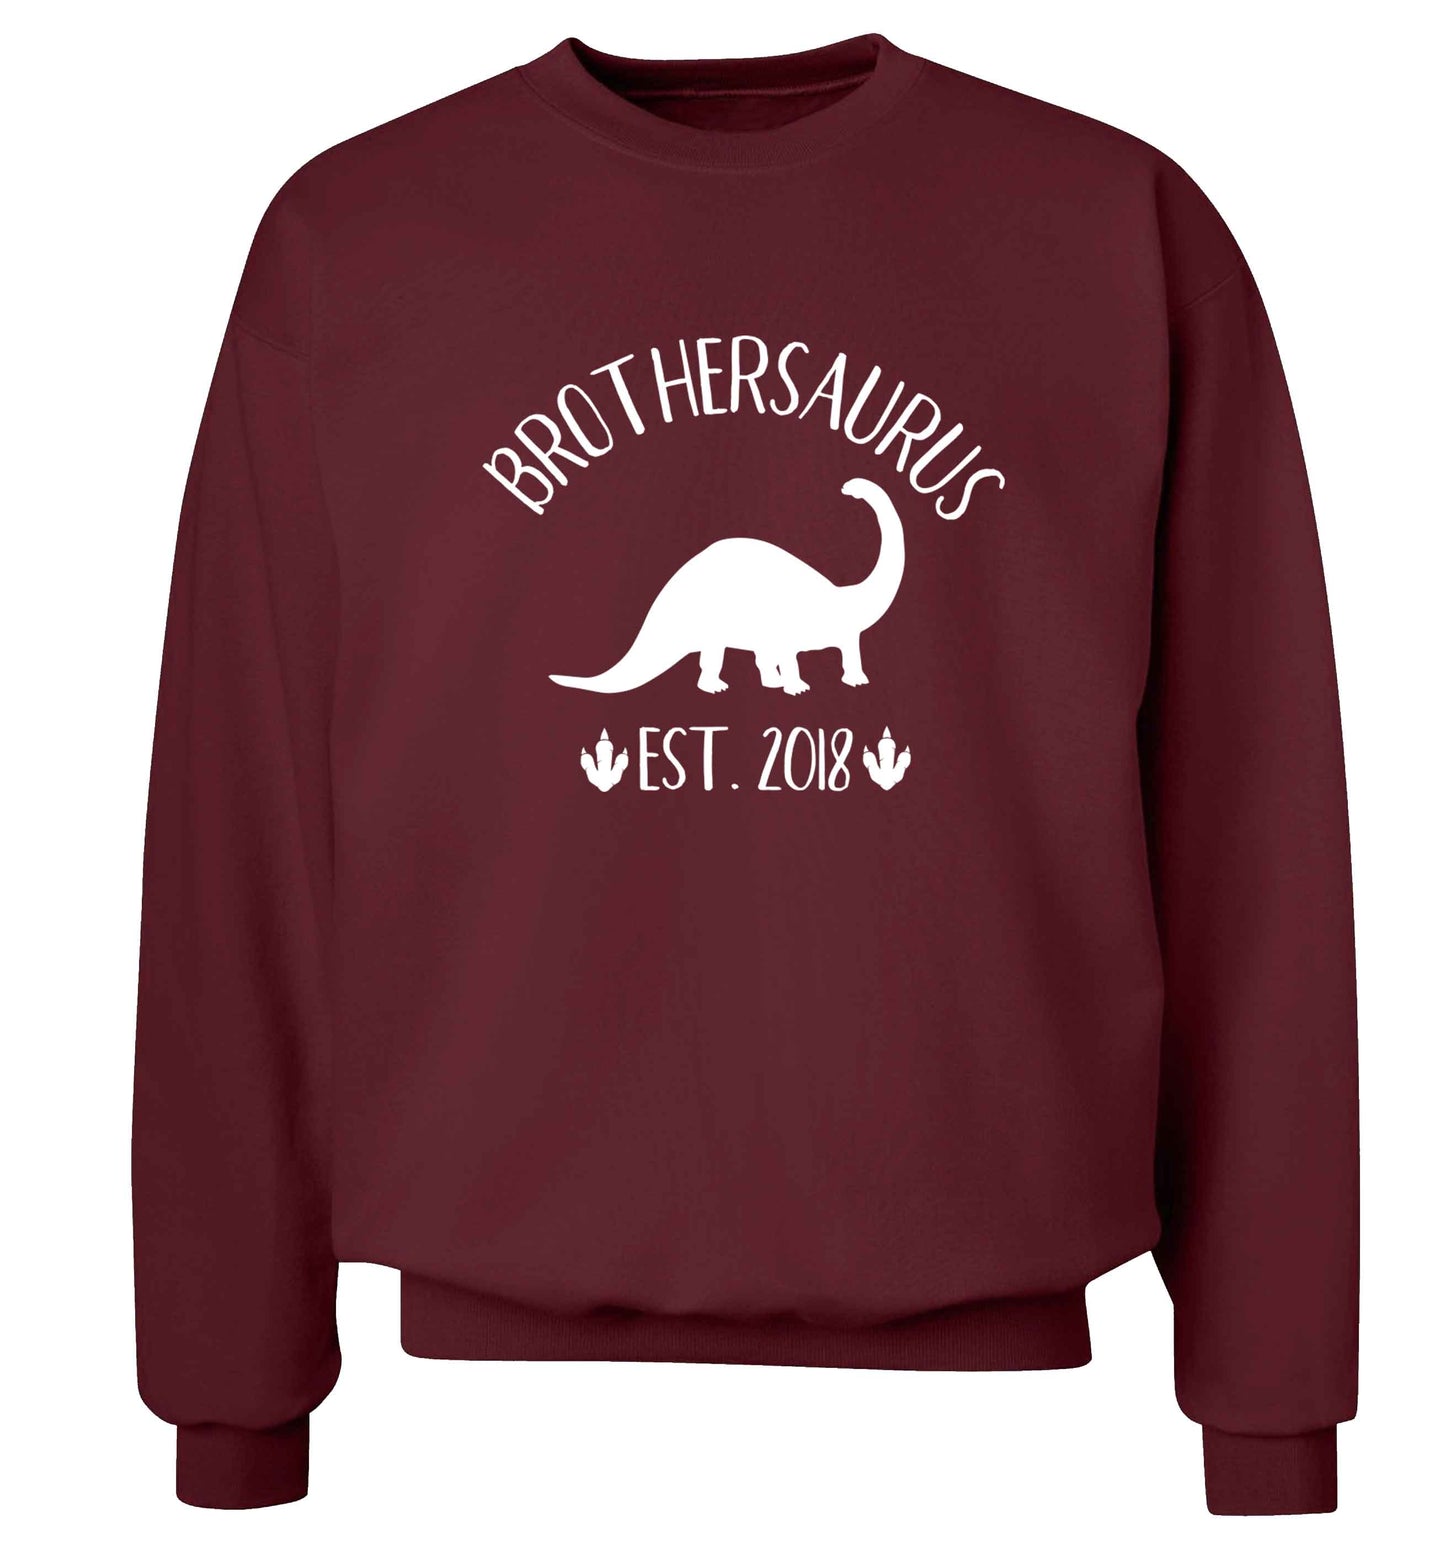 Personalised brothersaurus since (custom date) Adult's unisex maroon Sweater 2XL